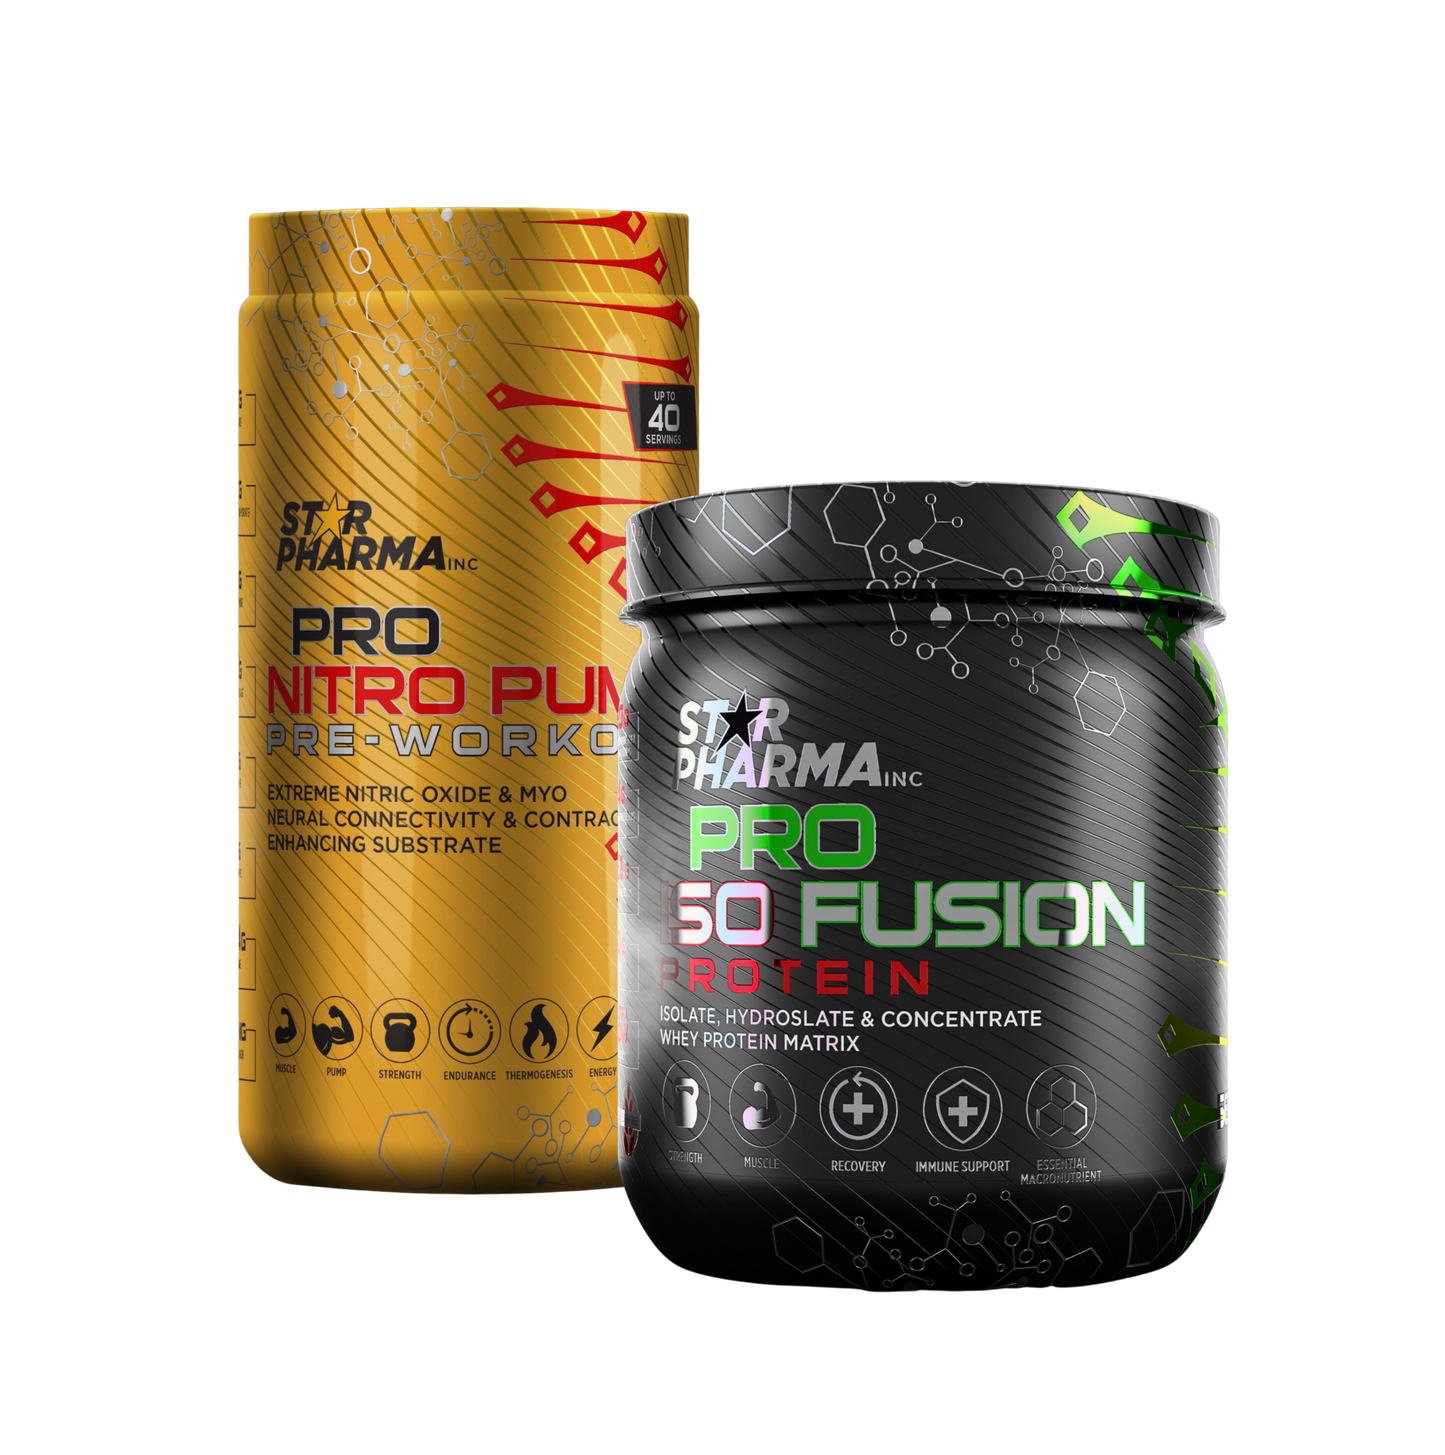 Pro Nitro Pump Pre-Workout + Pro Iso Fusion Protein